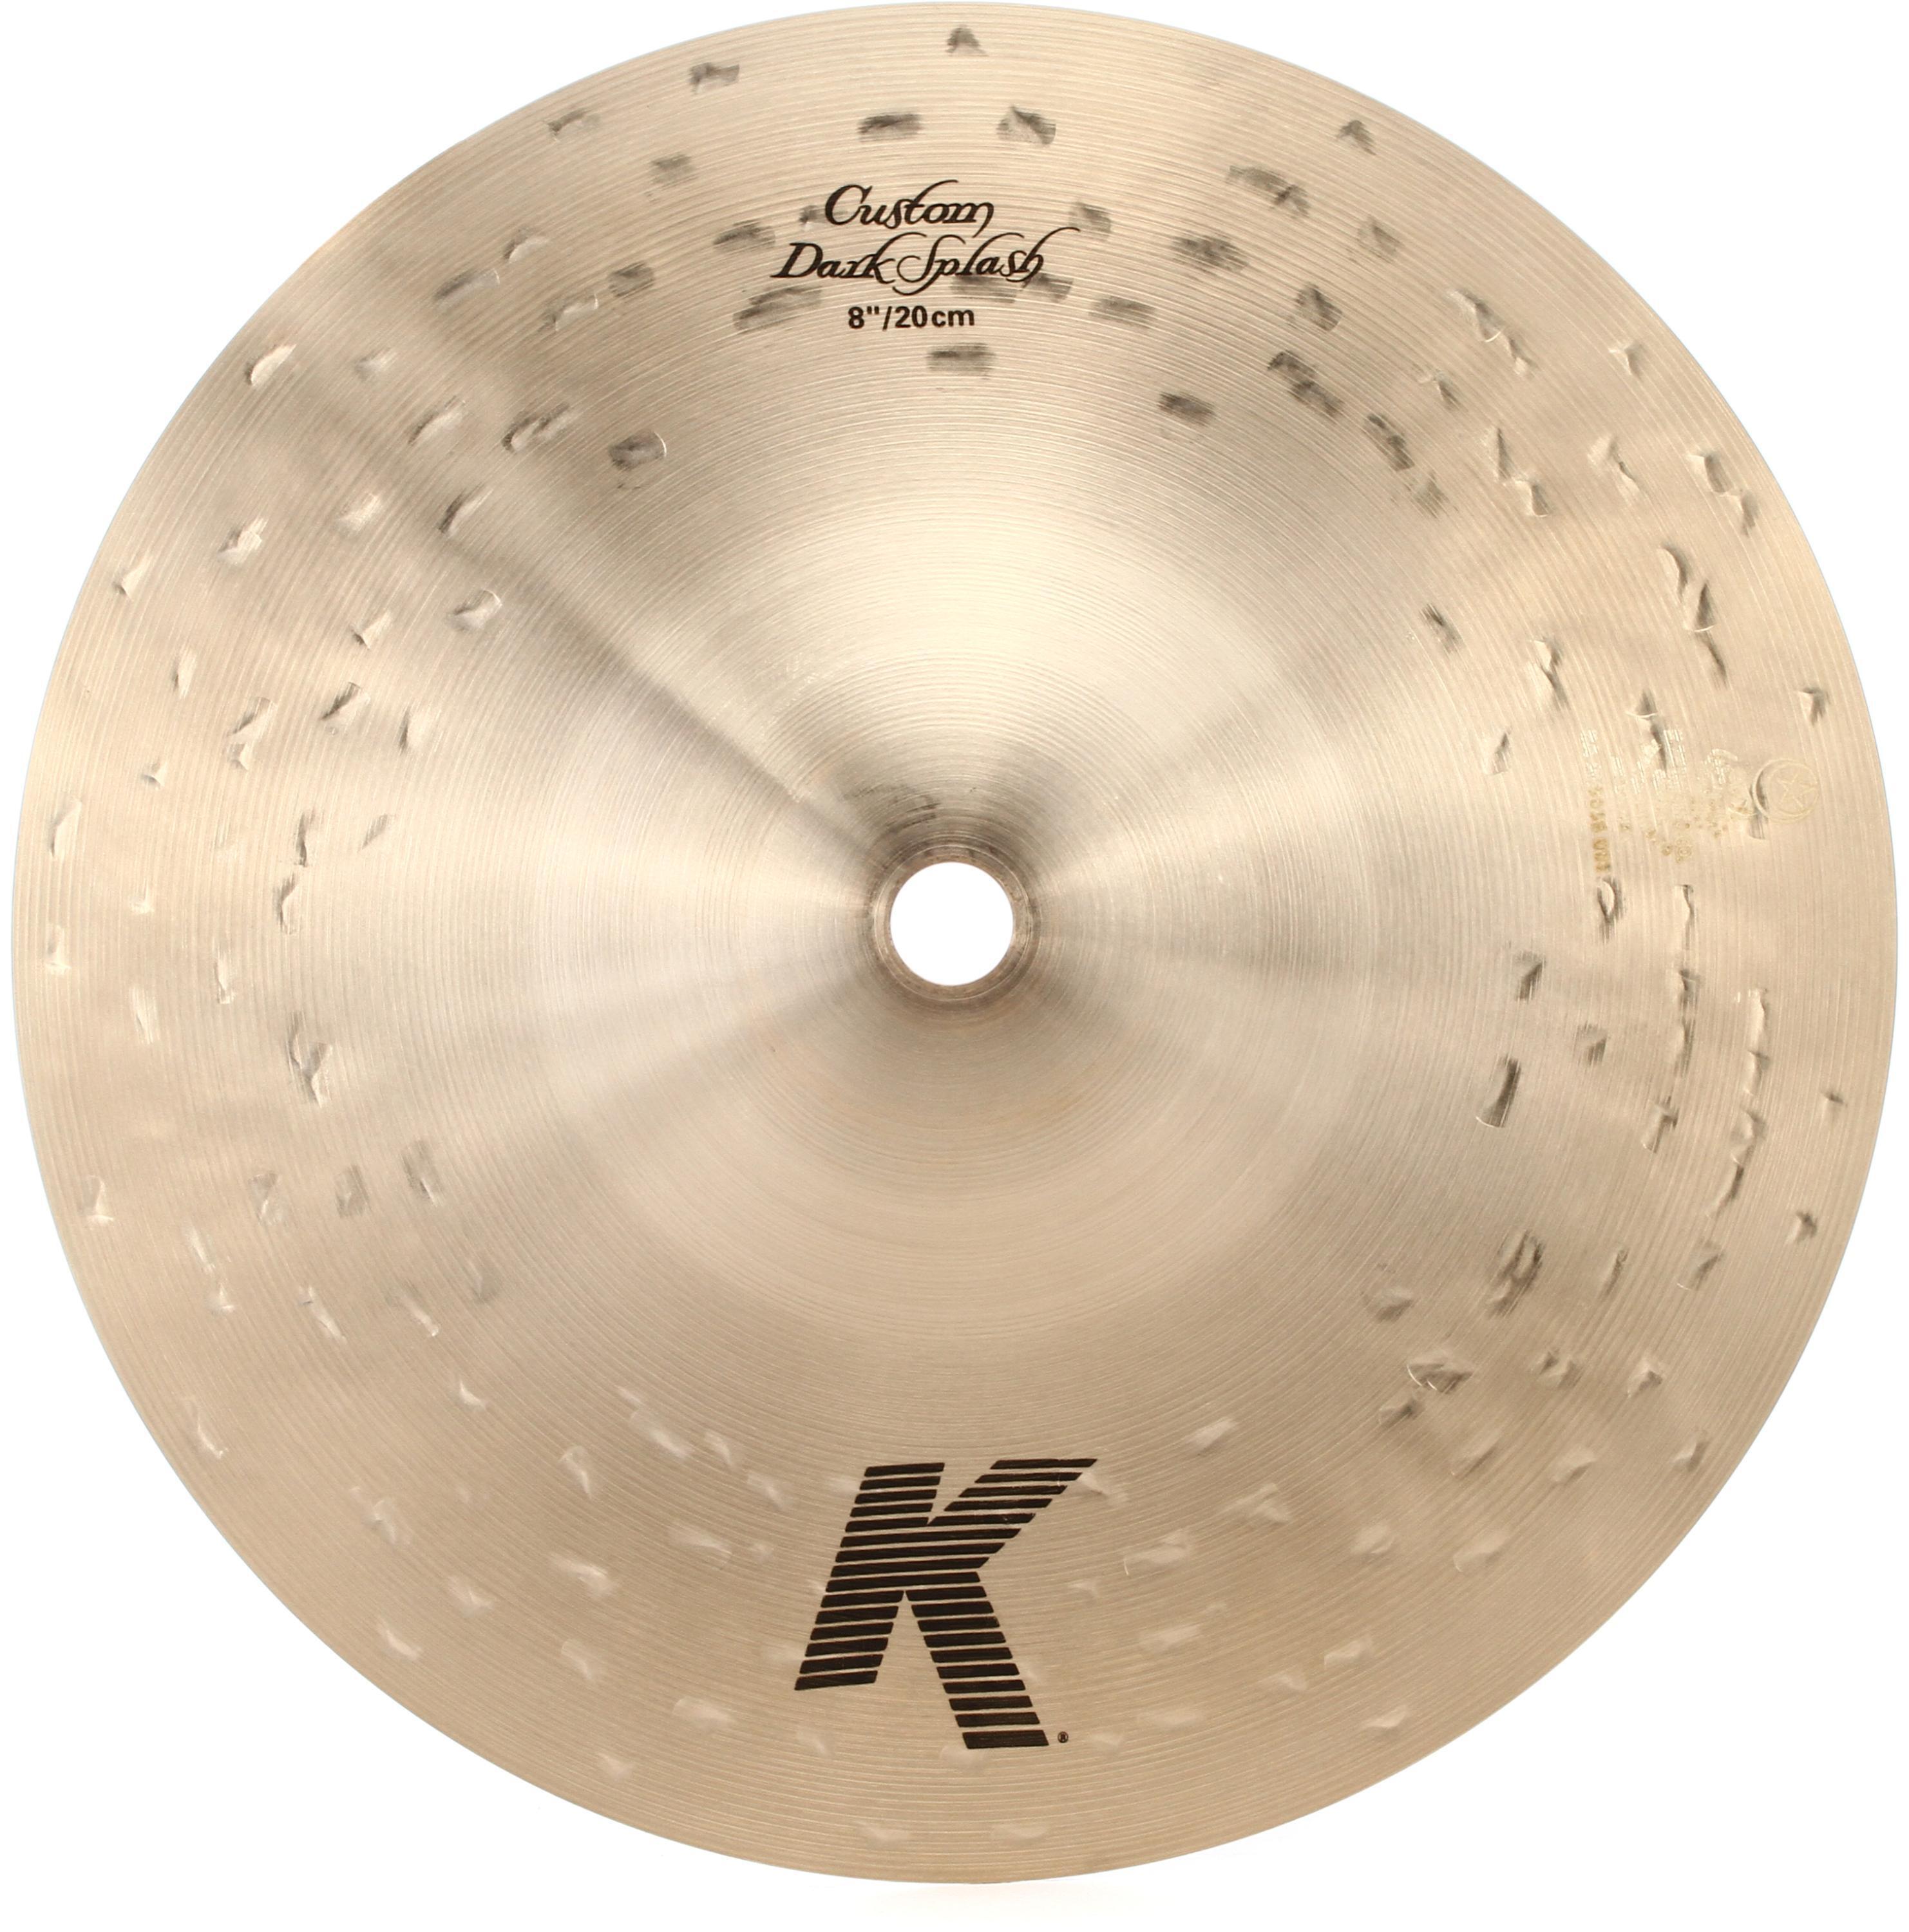 Zildjian 8 inch K Custom Dark Splash Cymbal